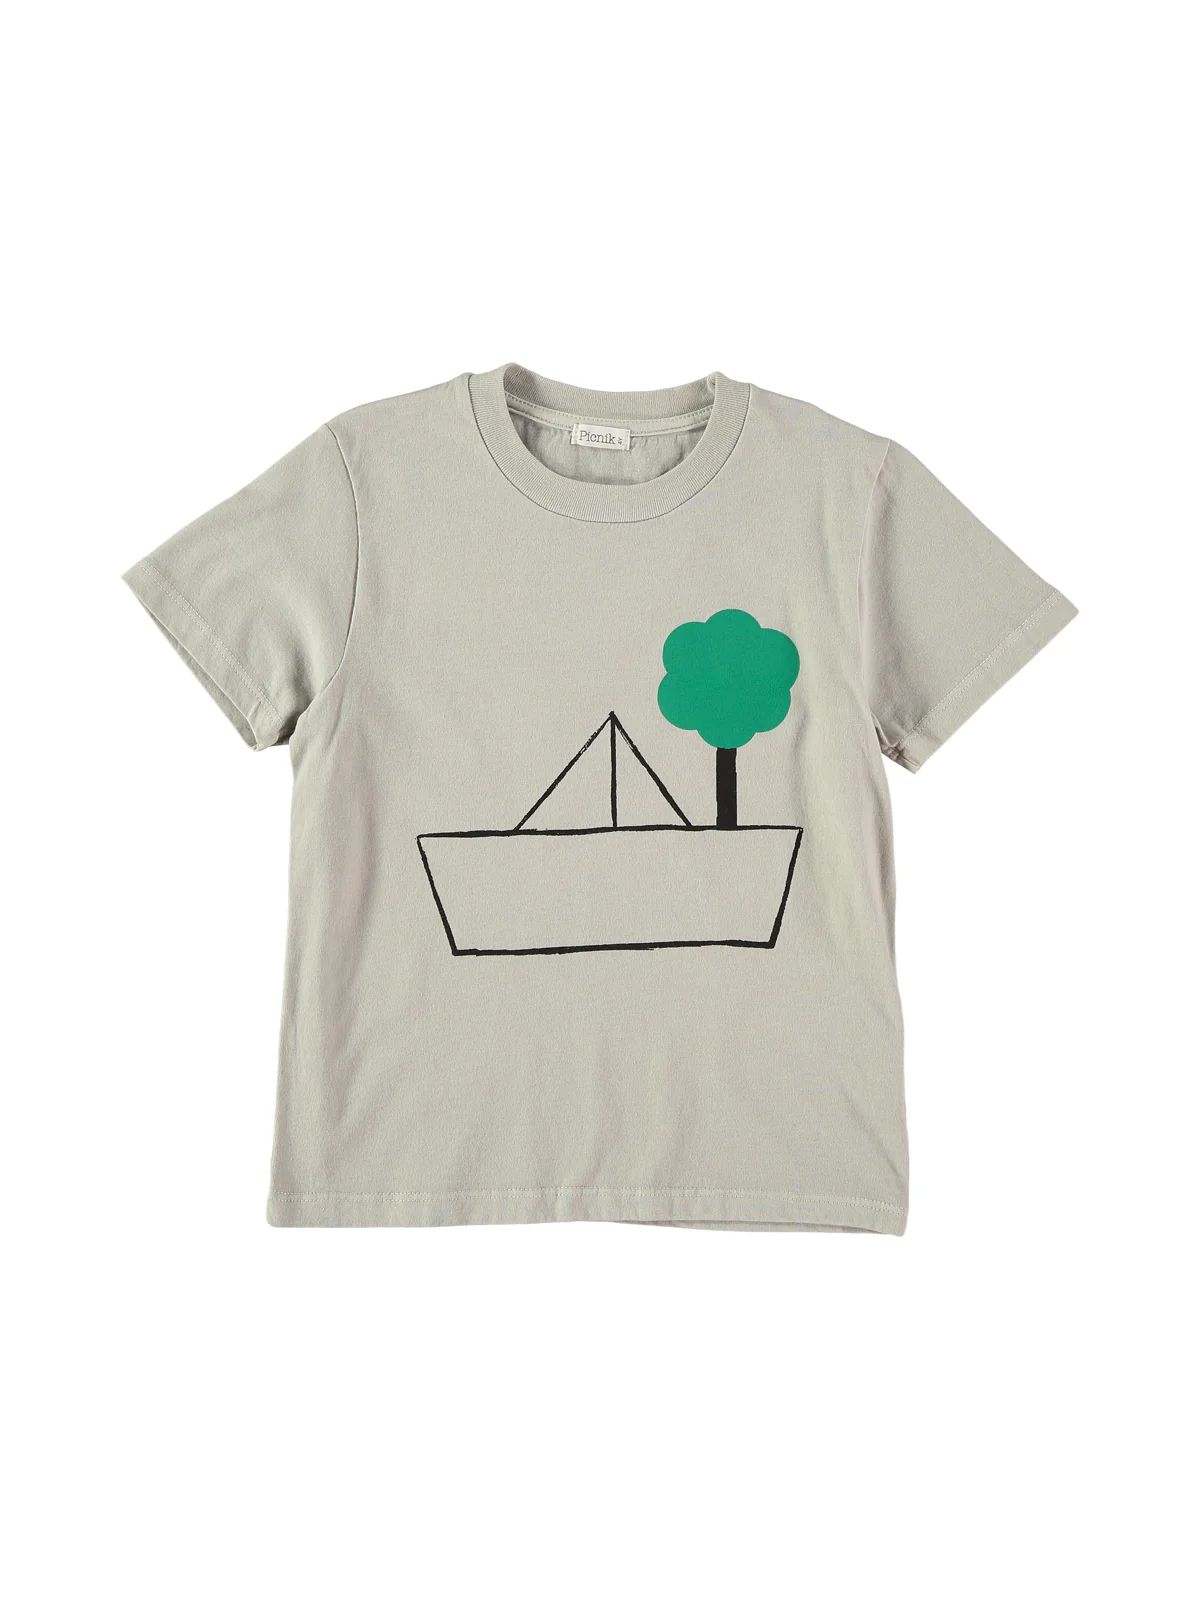 Sail Boat T-Shirt | Danrie